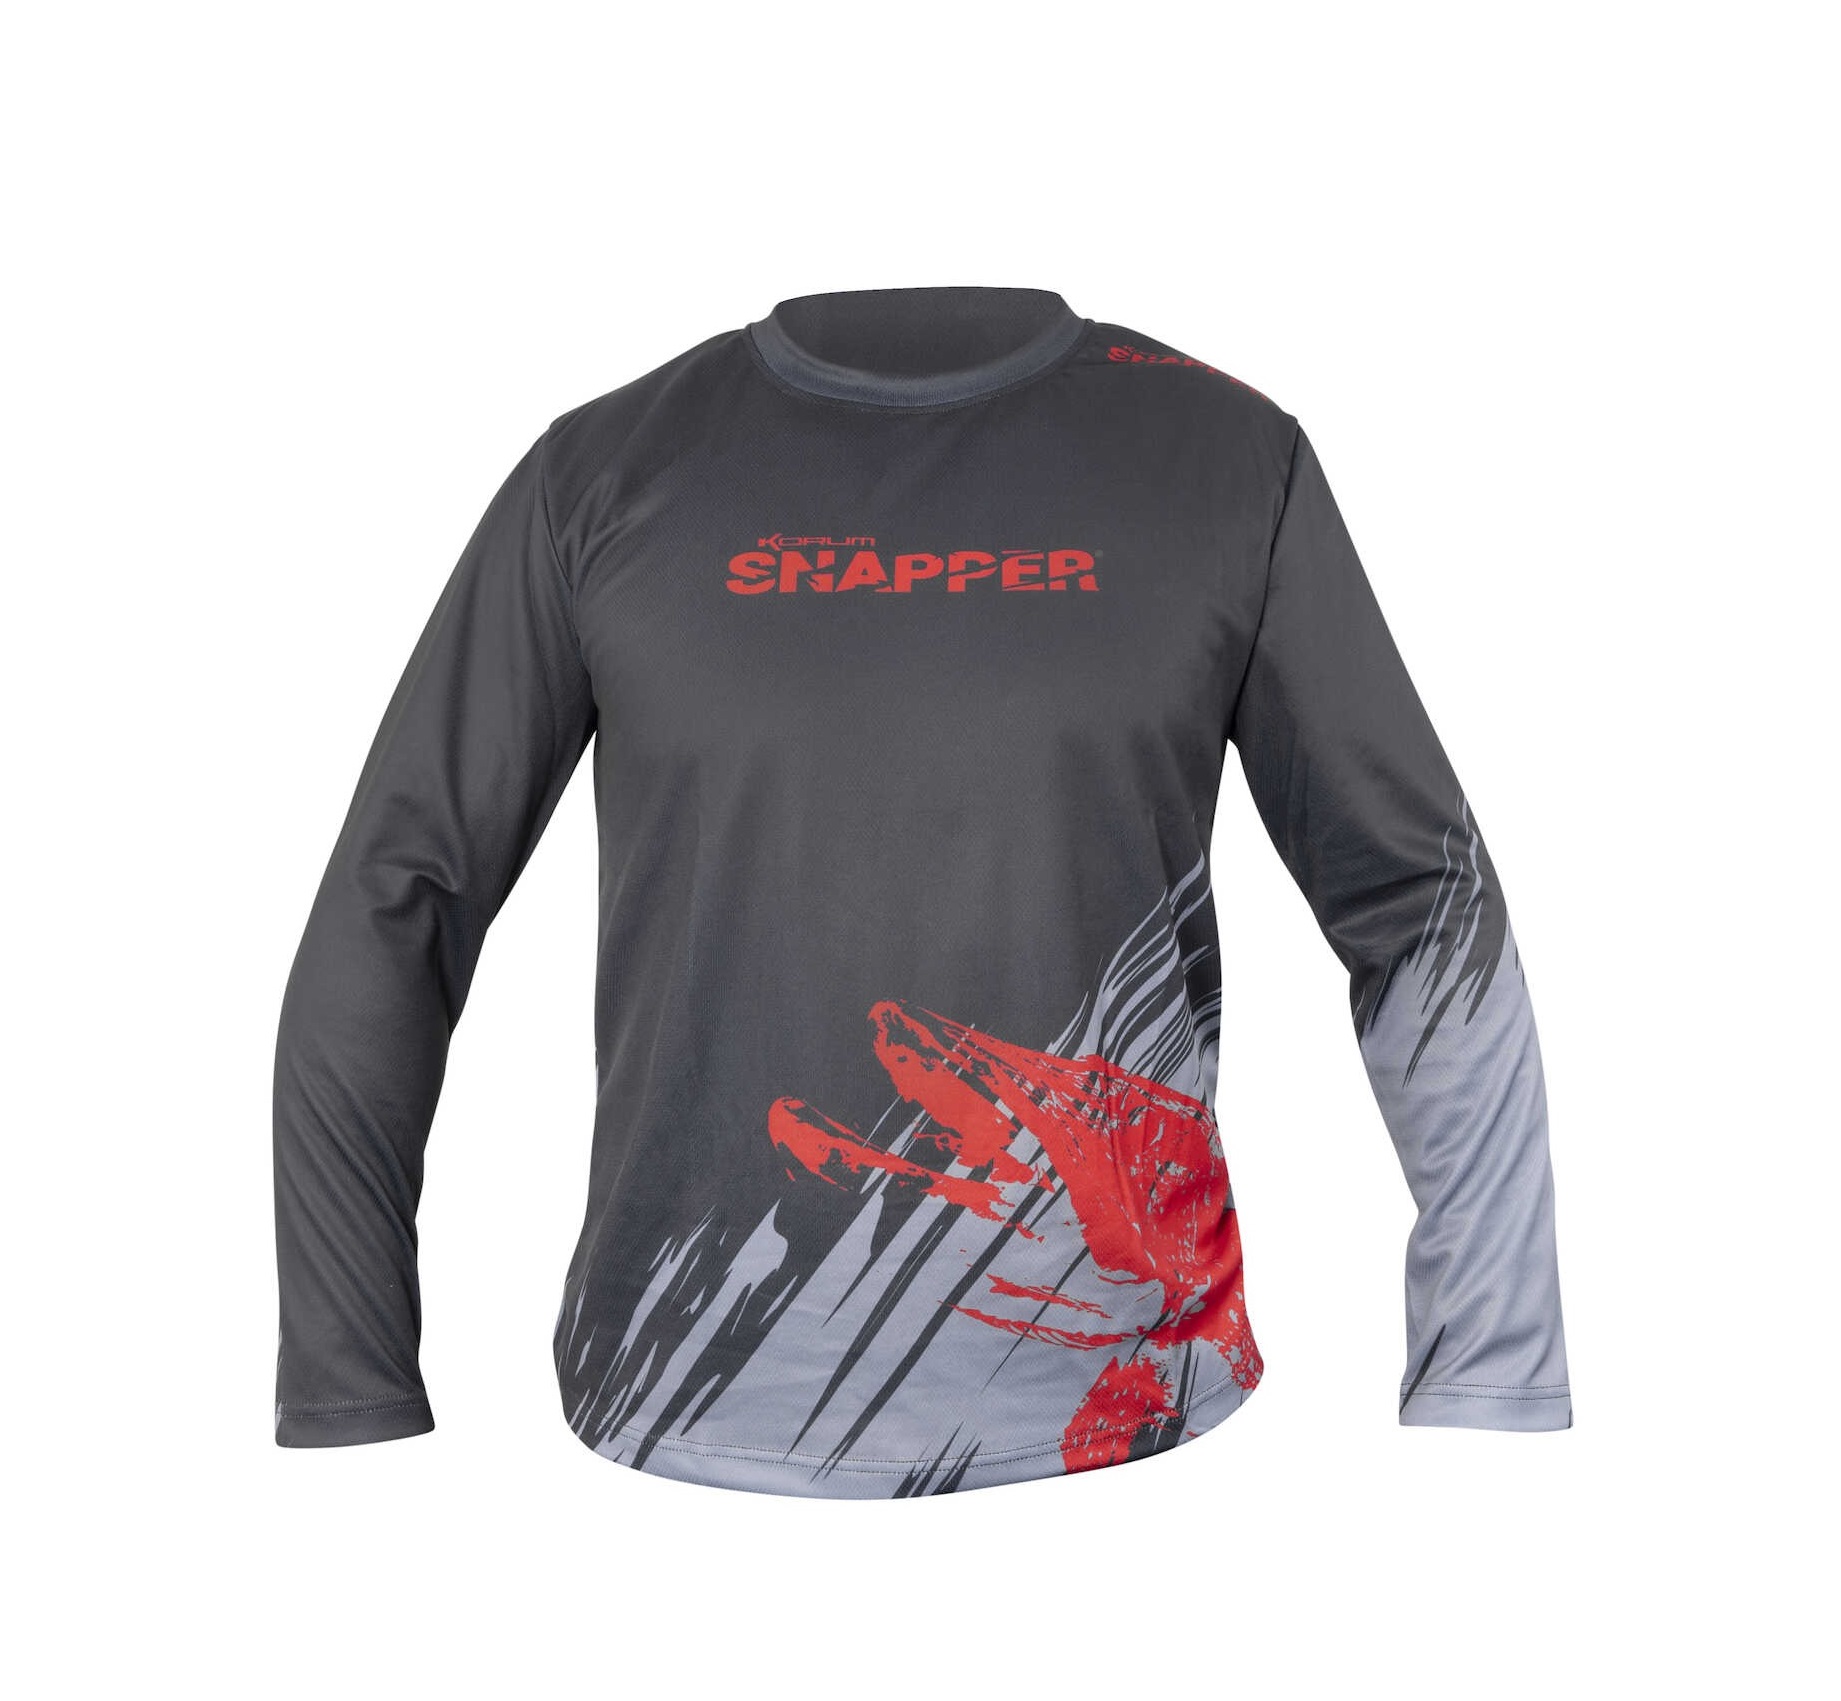 Korum Snapper Squad Shirt